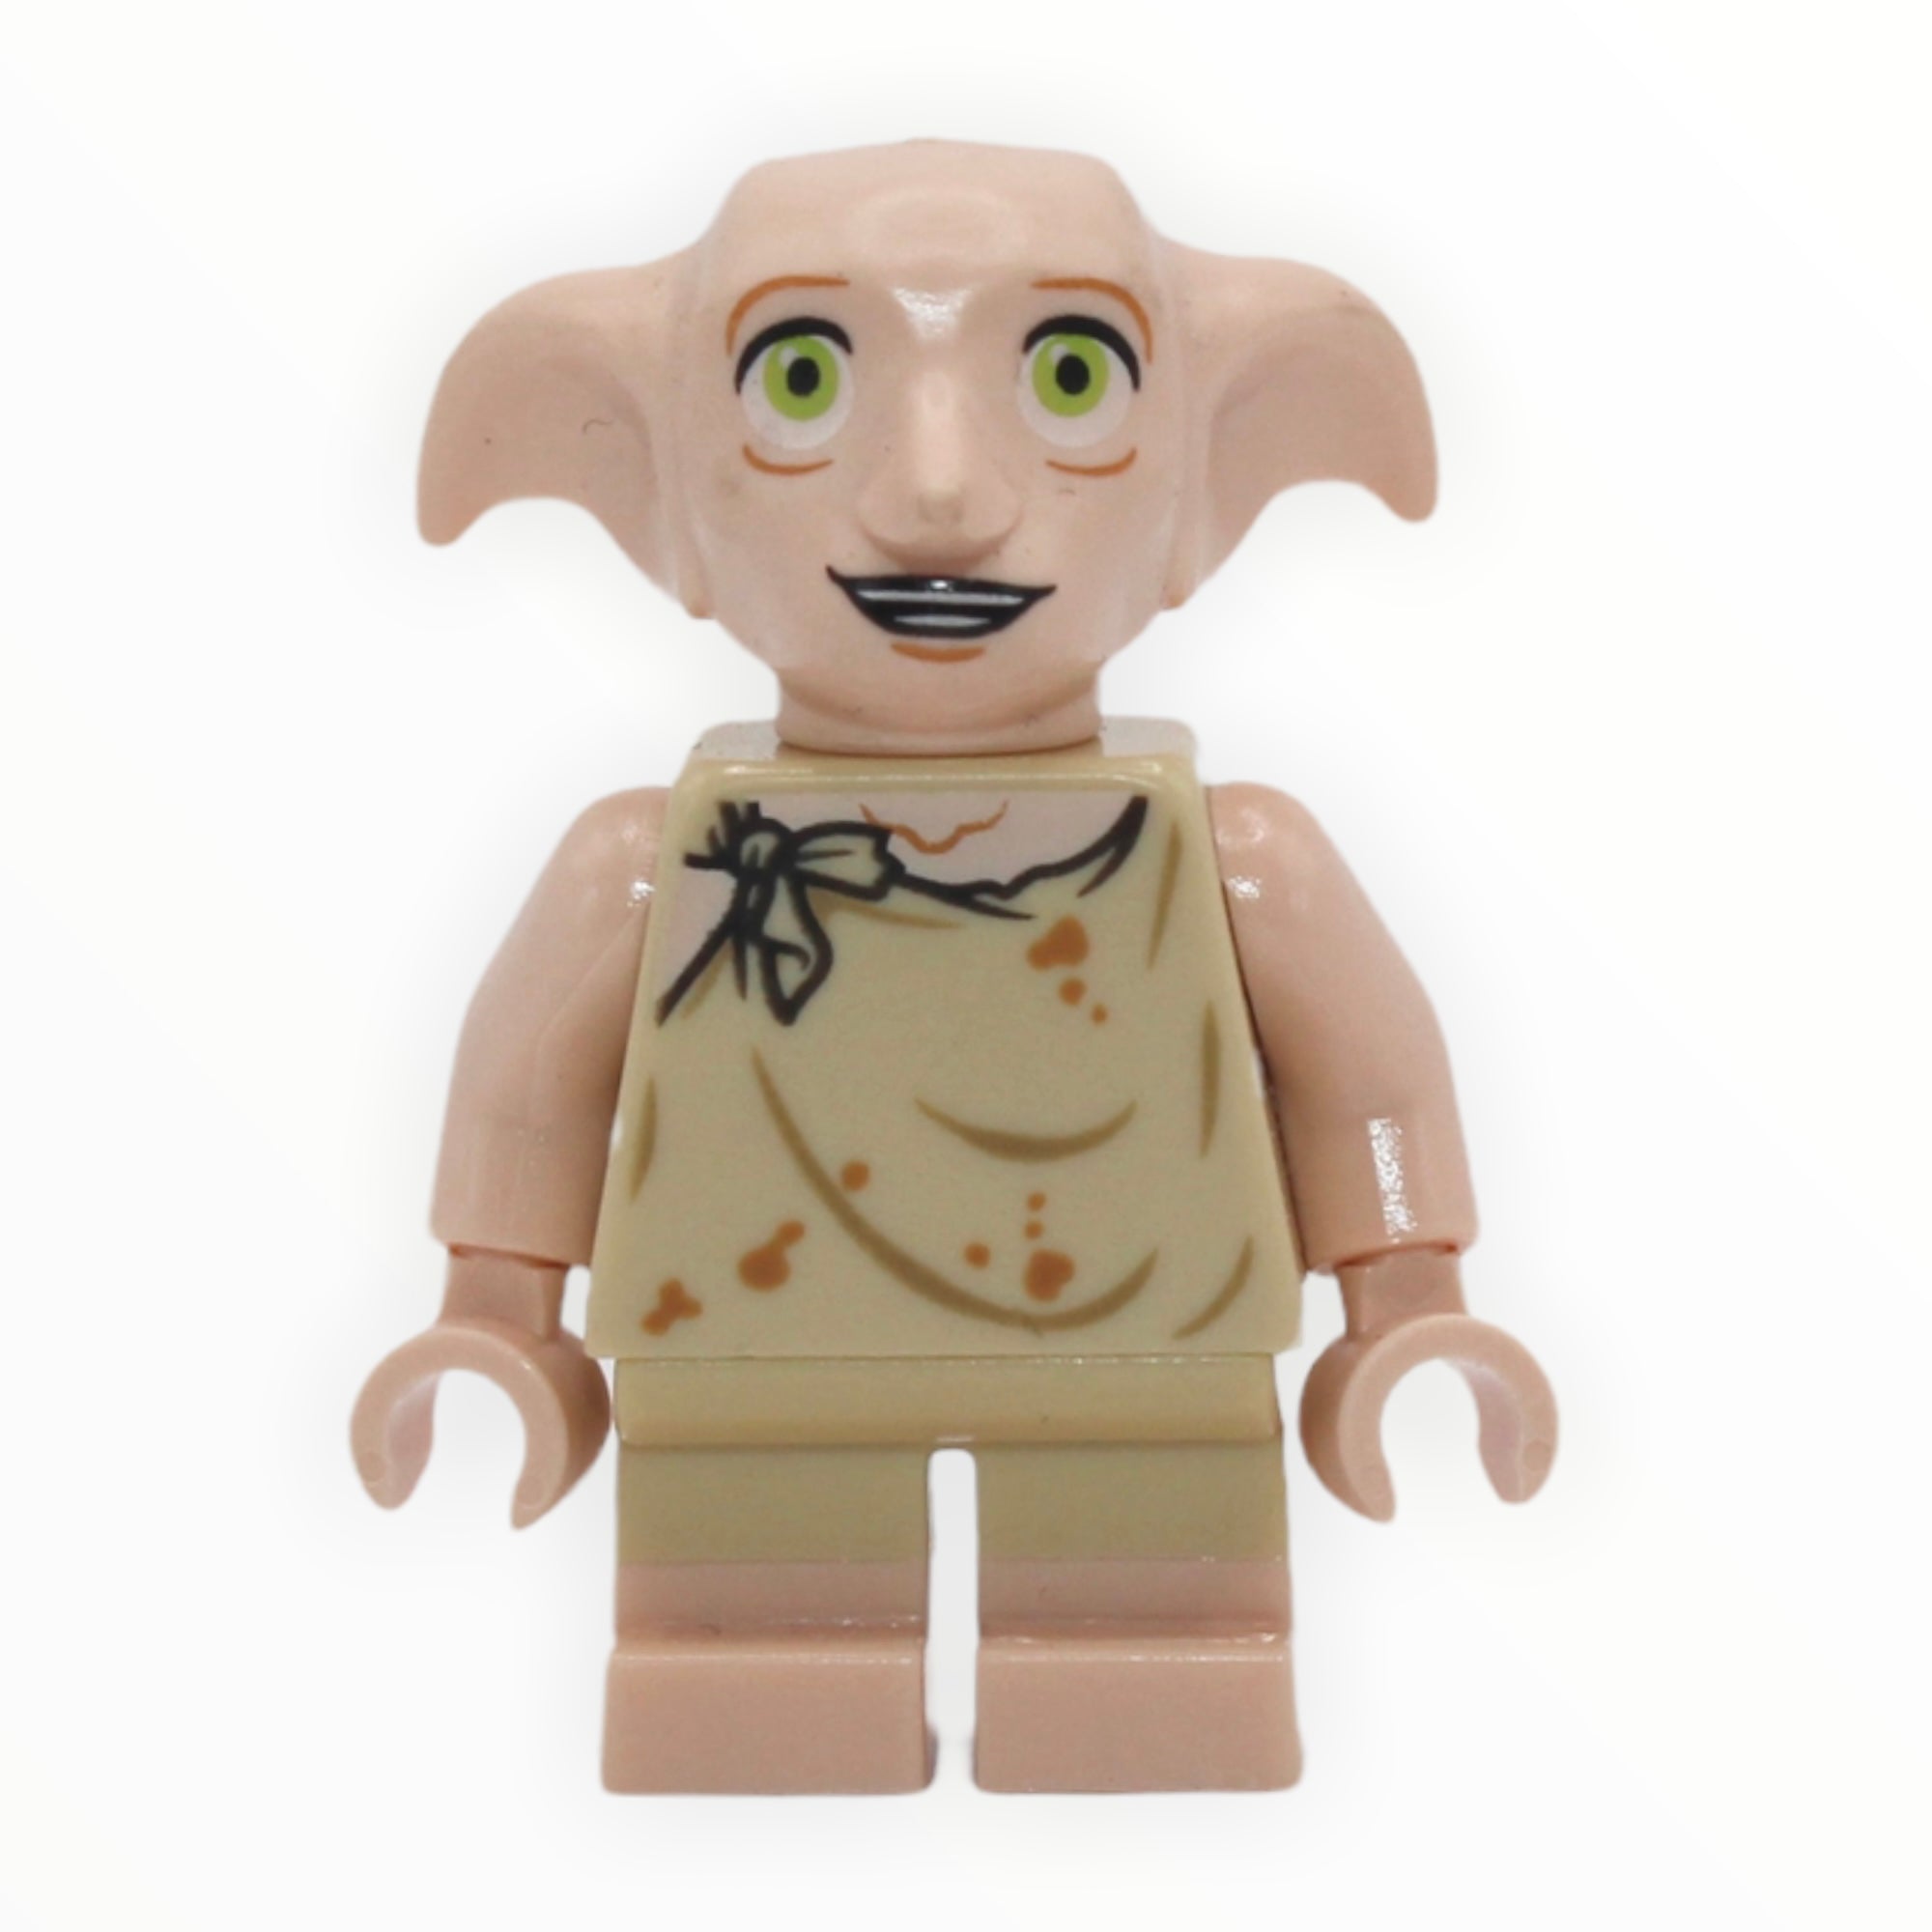 Dobby the Elf (open mouth smile, 2020)